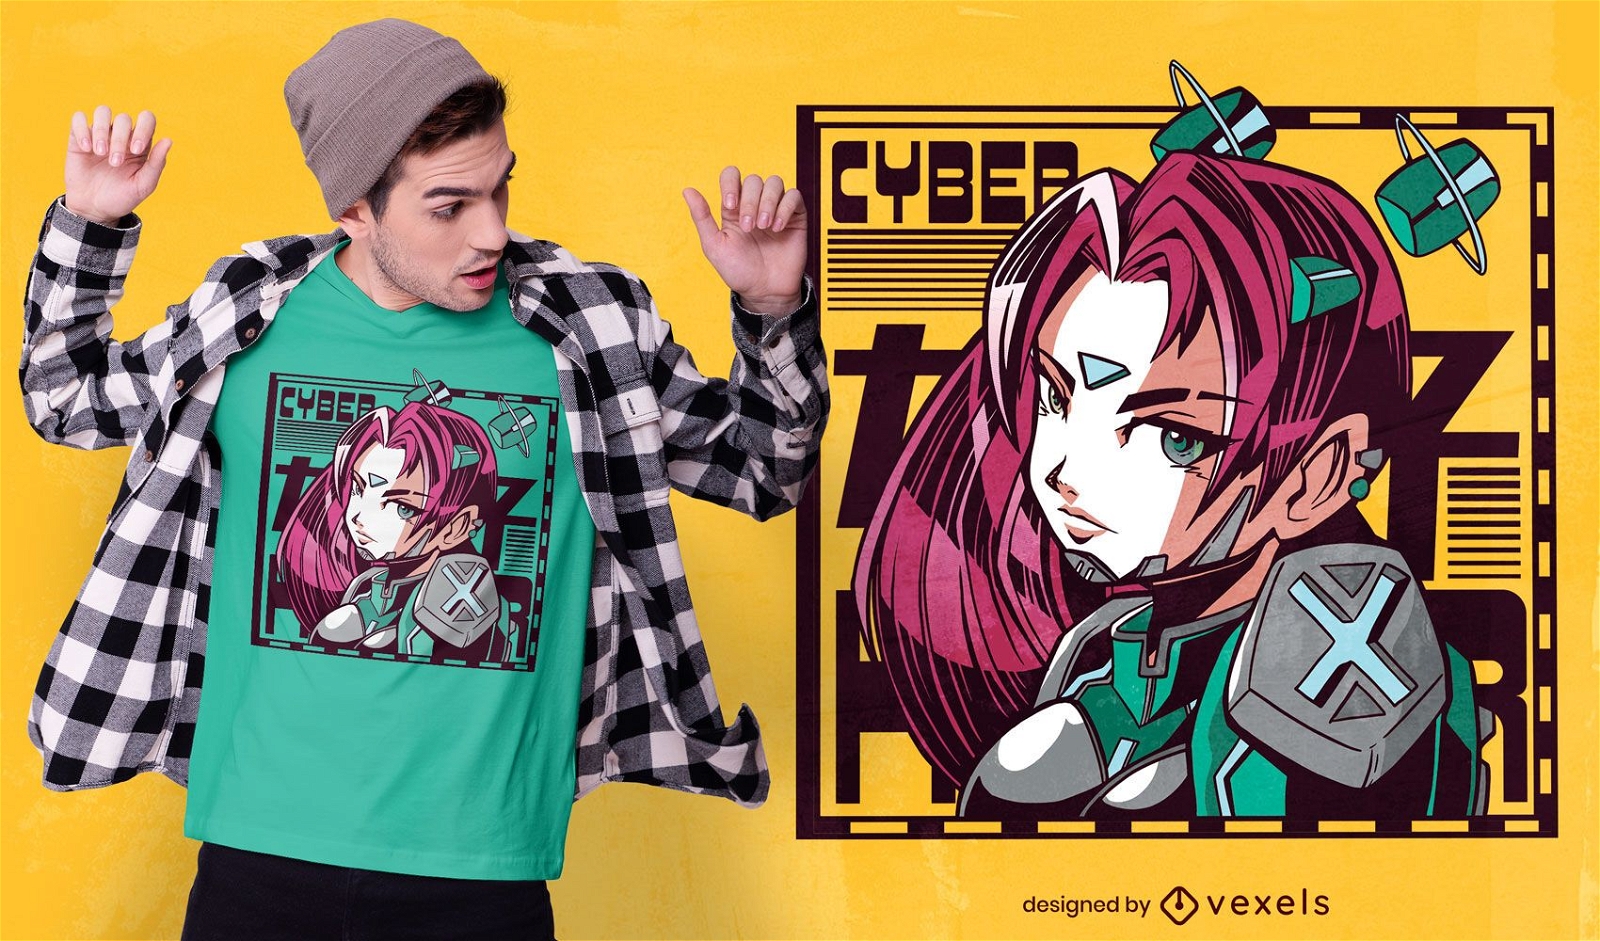 Cyber girl anime science fiction t-shirt design